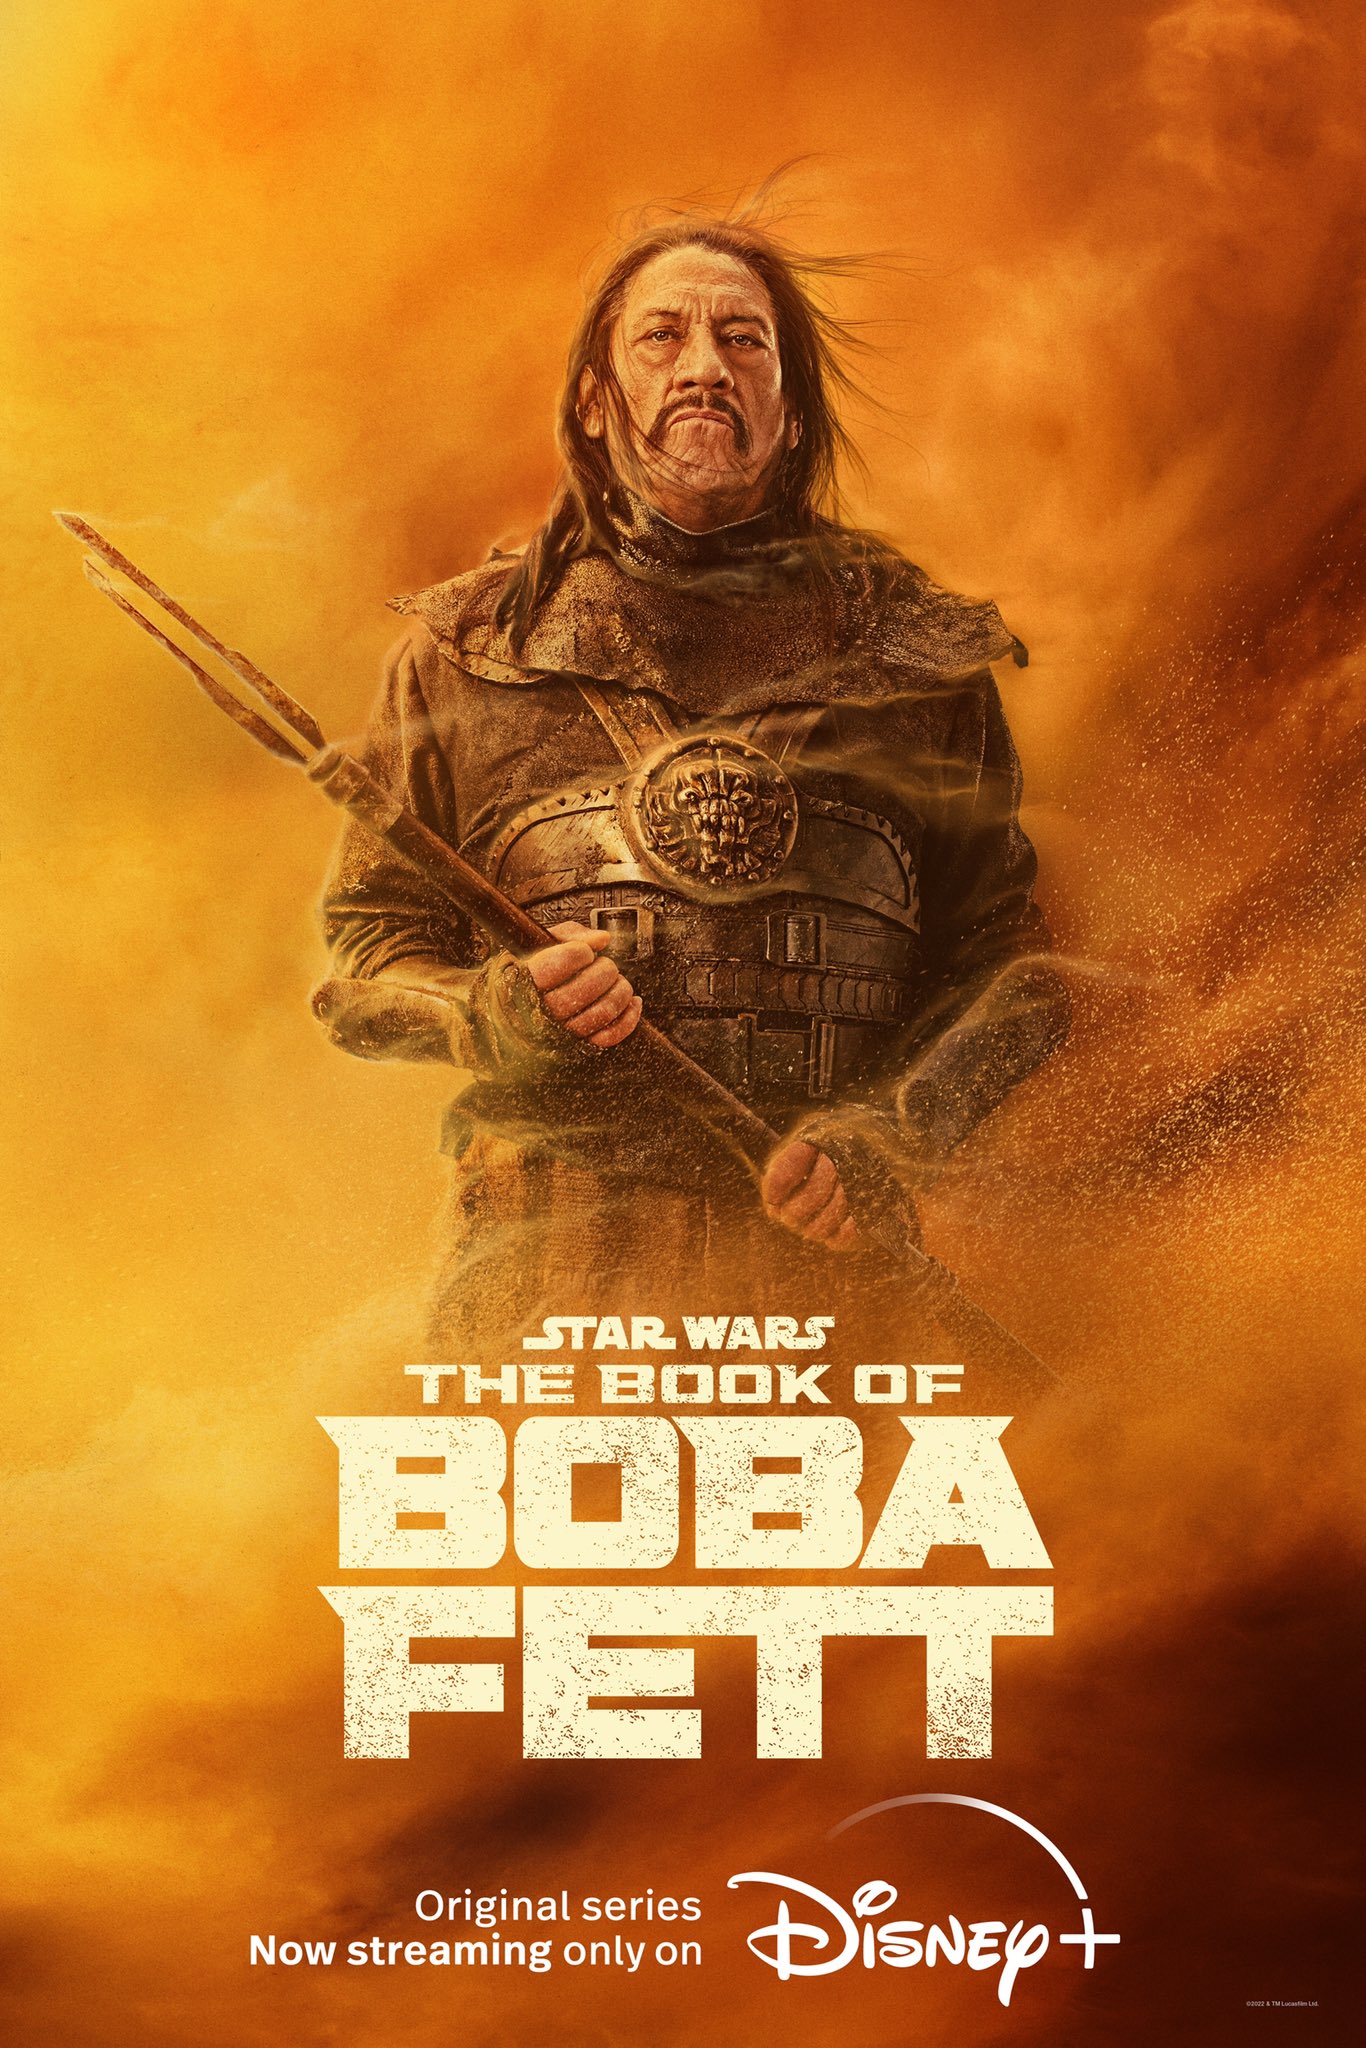 The book of boba fett poster